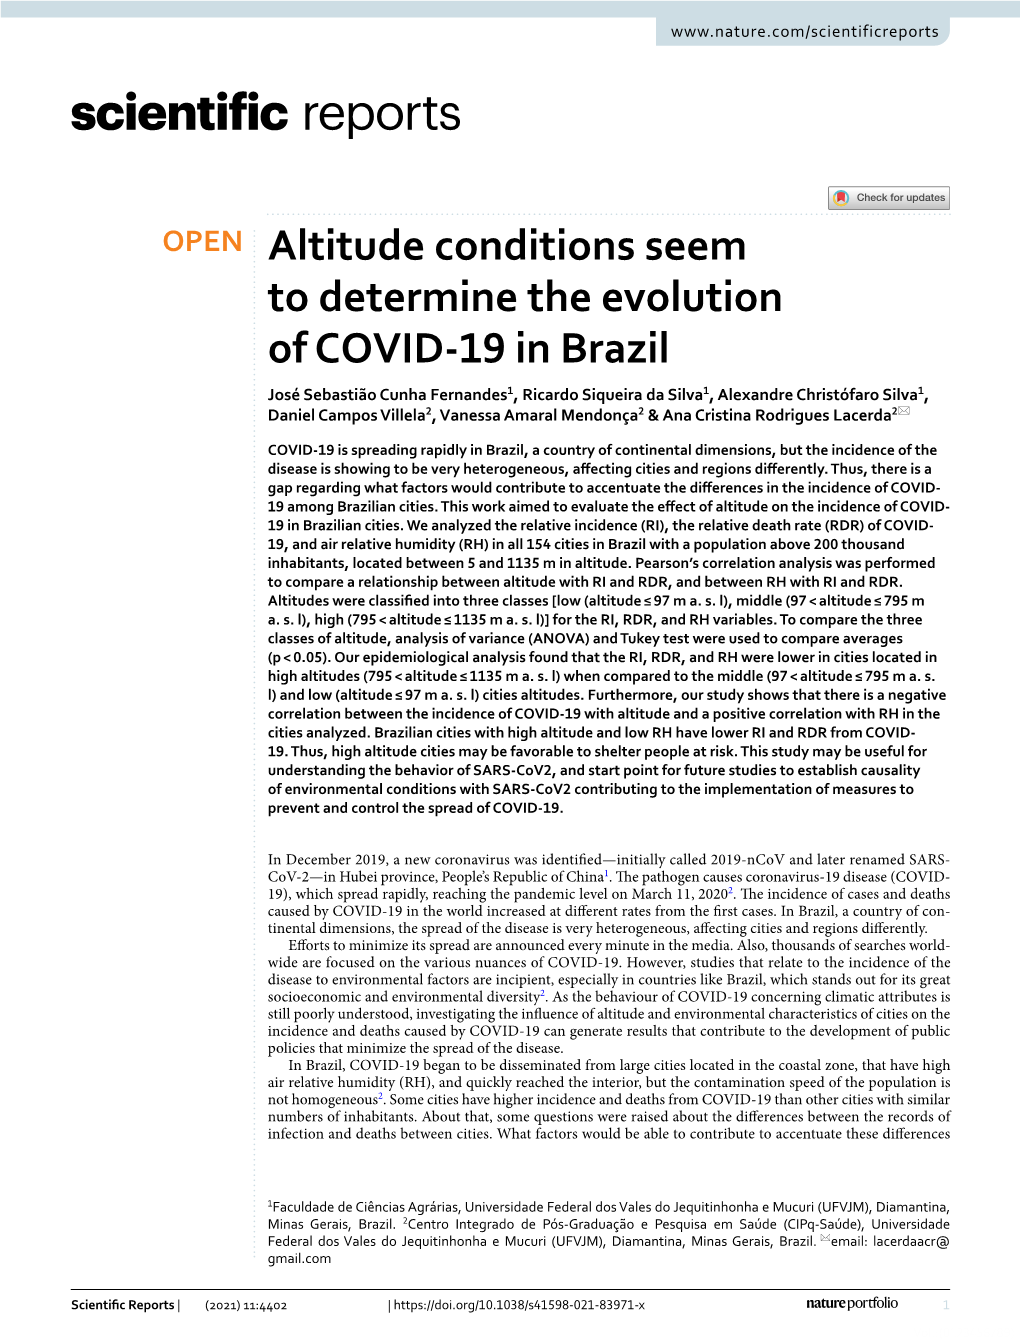 Altitude Conditions Seem to Determine the Evolution of COVID-19 in Brazil